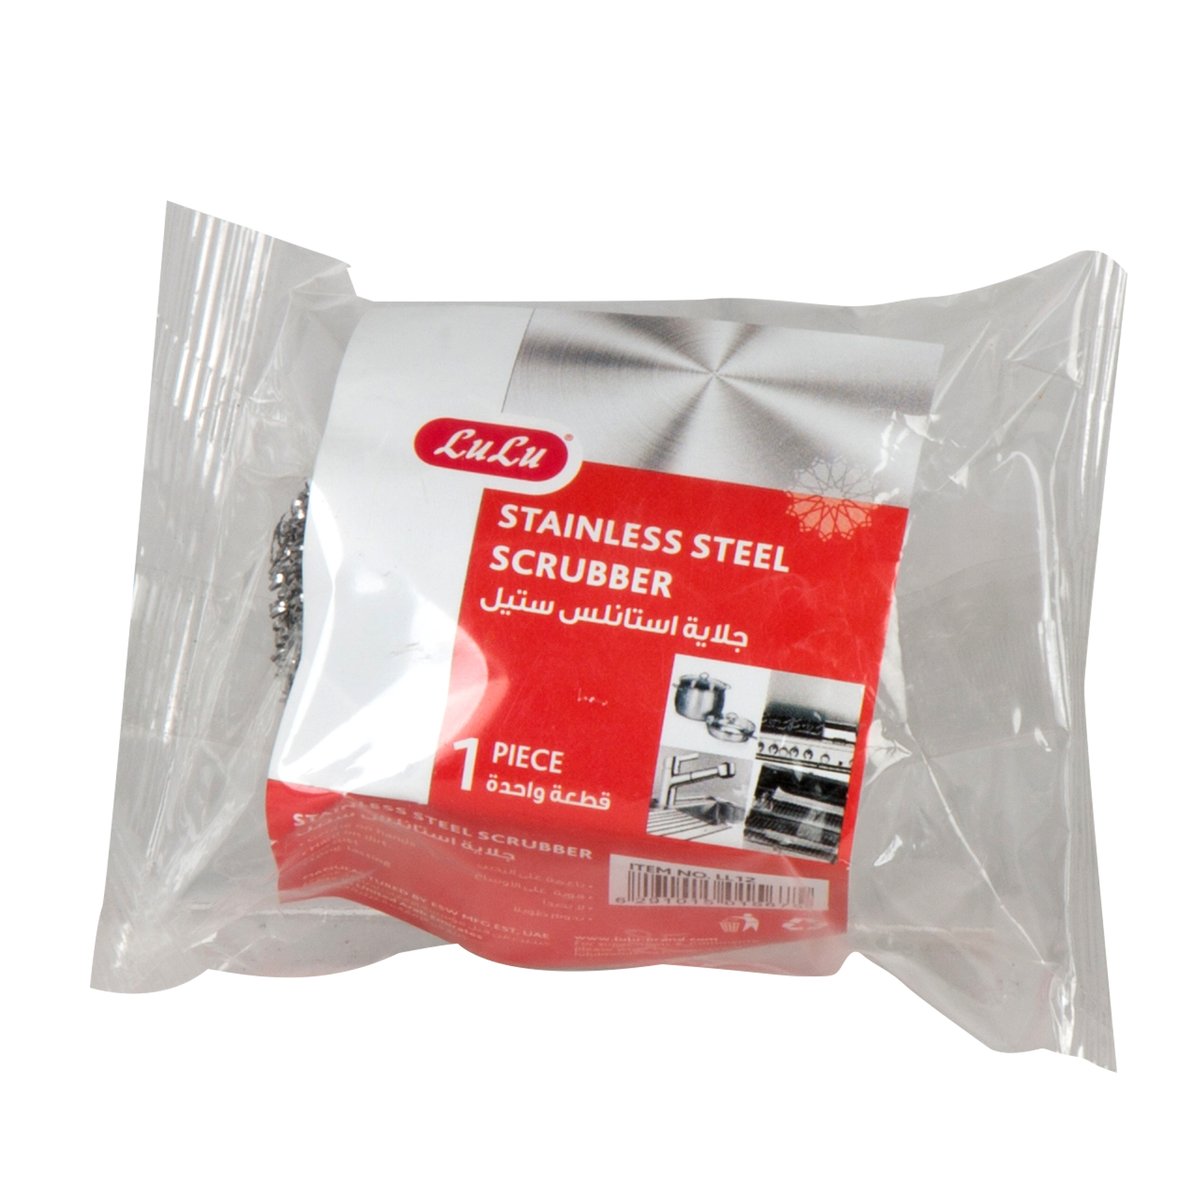 LuLu Stainless Steel Scrubber 1pc